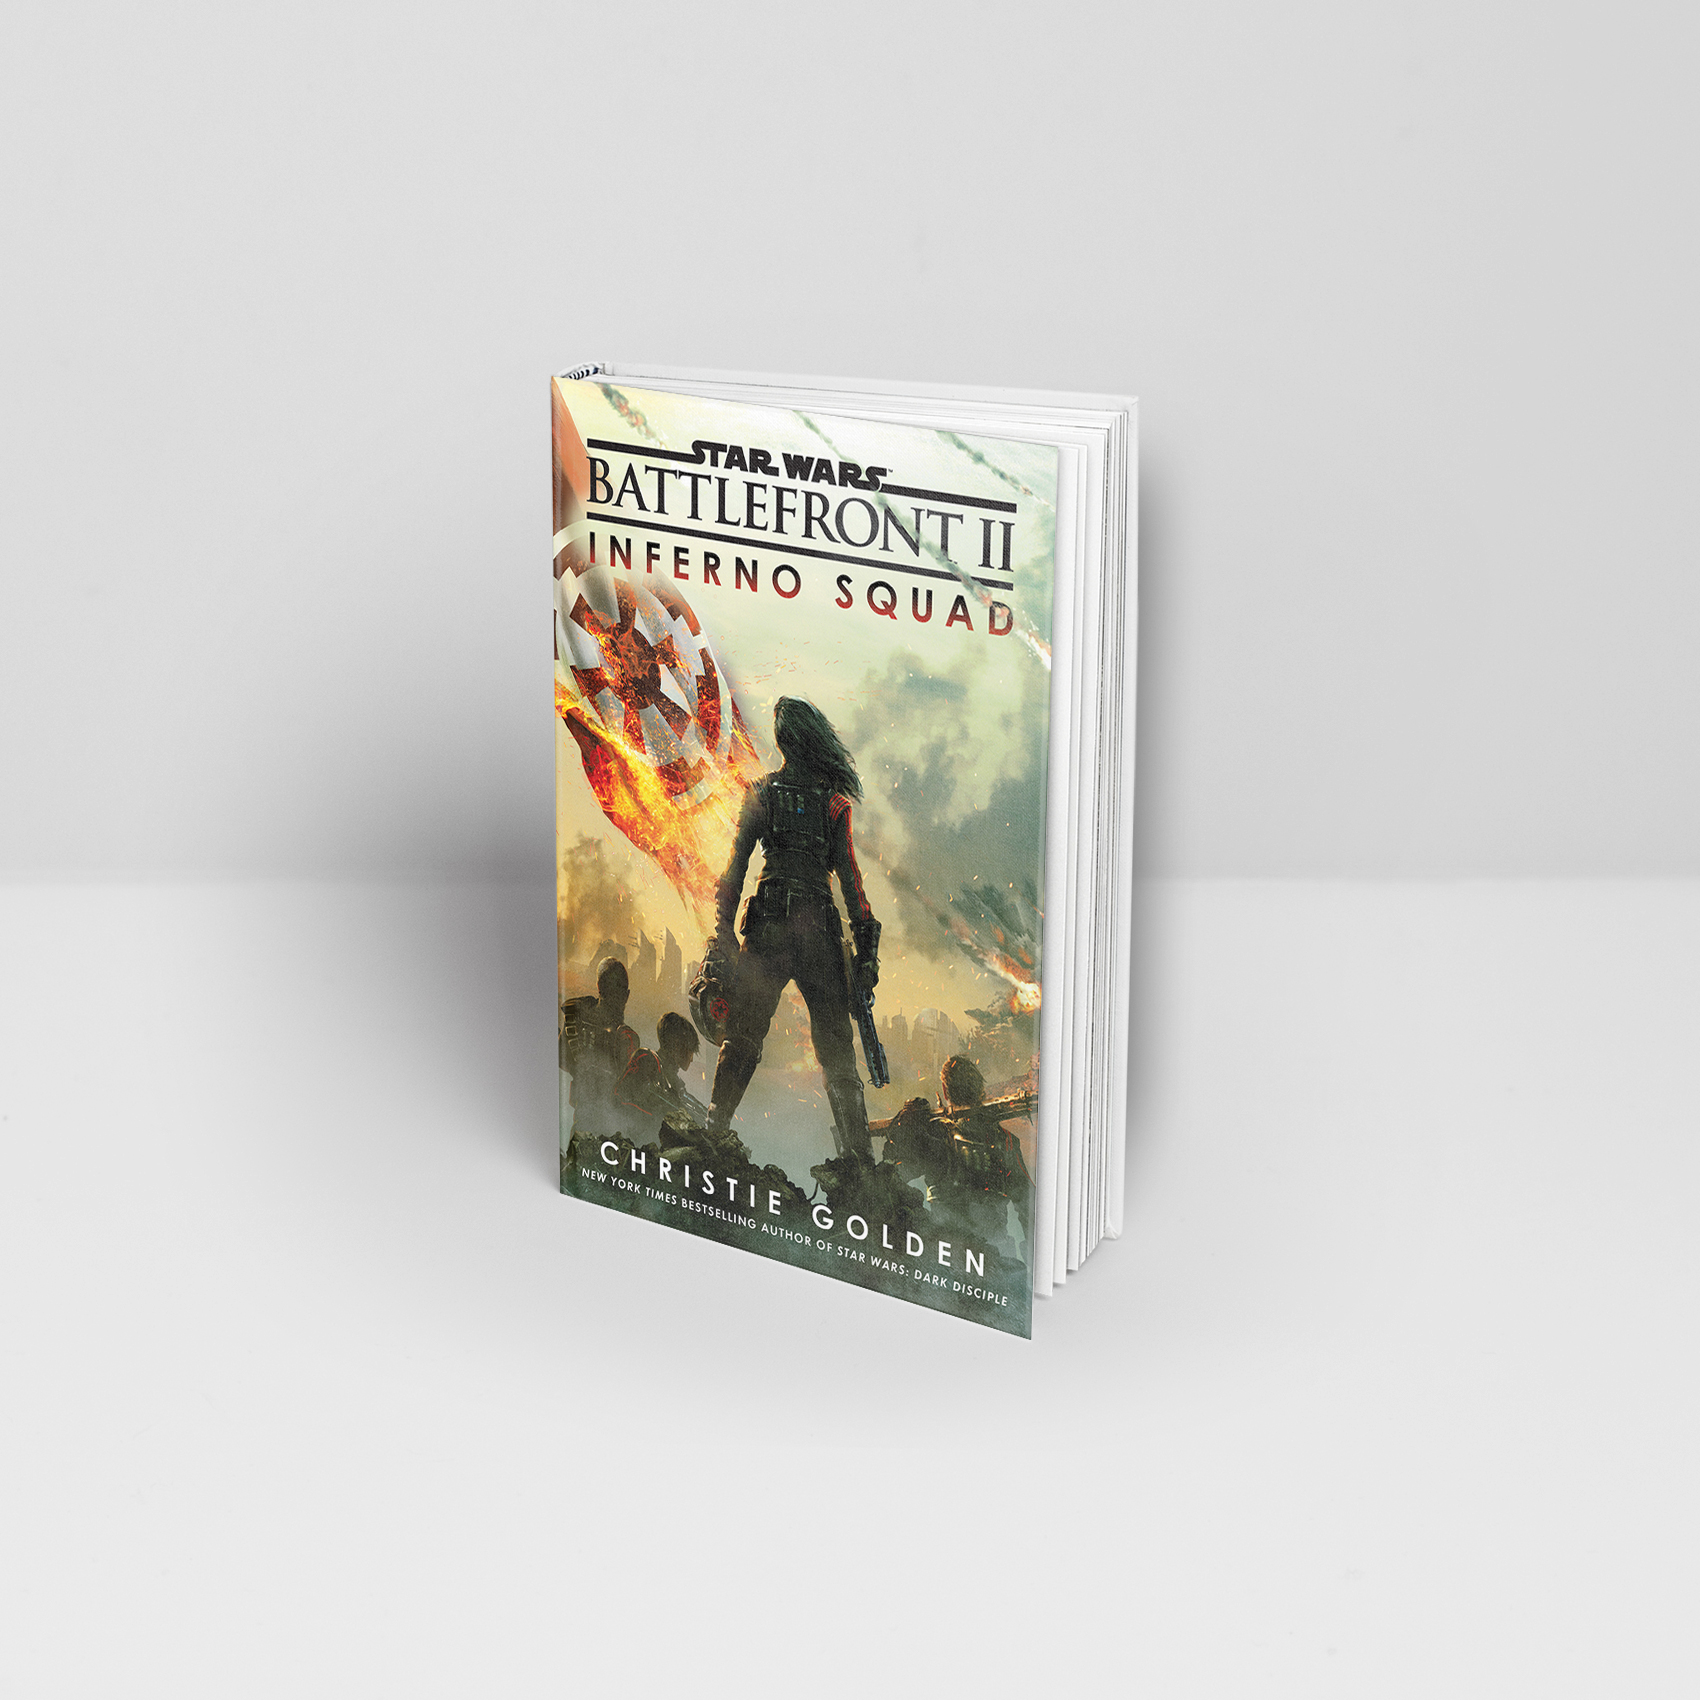 Battlefront II: Inferno Squad Novel by Author Christie Golden